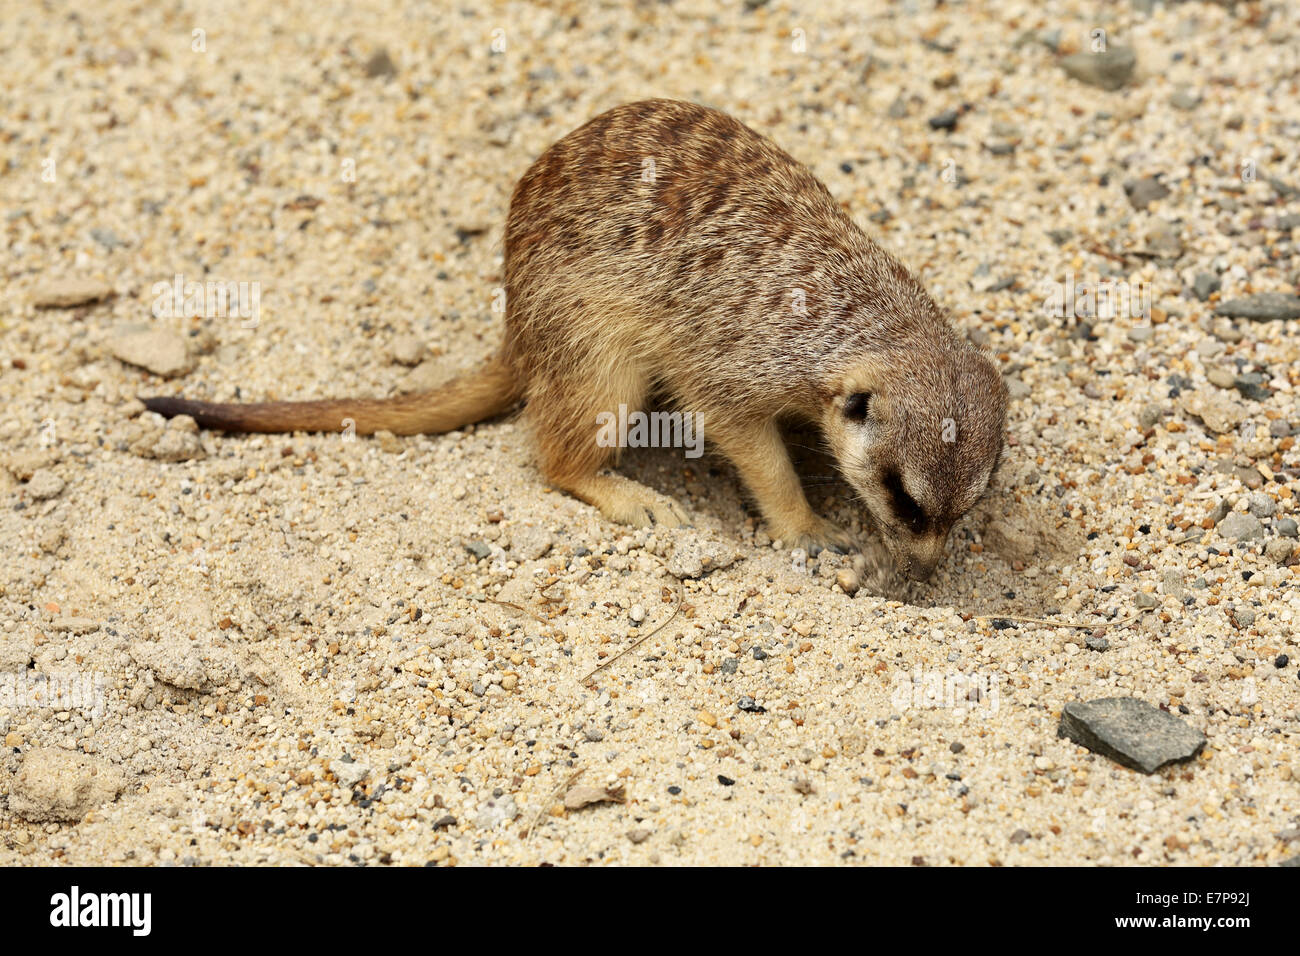 A Meerkat (Suricata suricatta) burrowing in sandy ground. Meerkats originate from southern Africa. Stock Photo